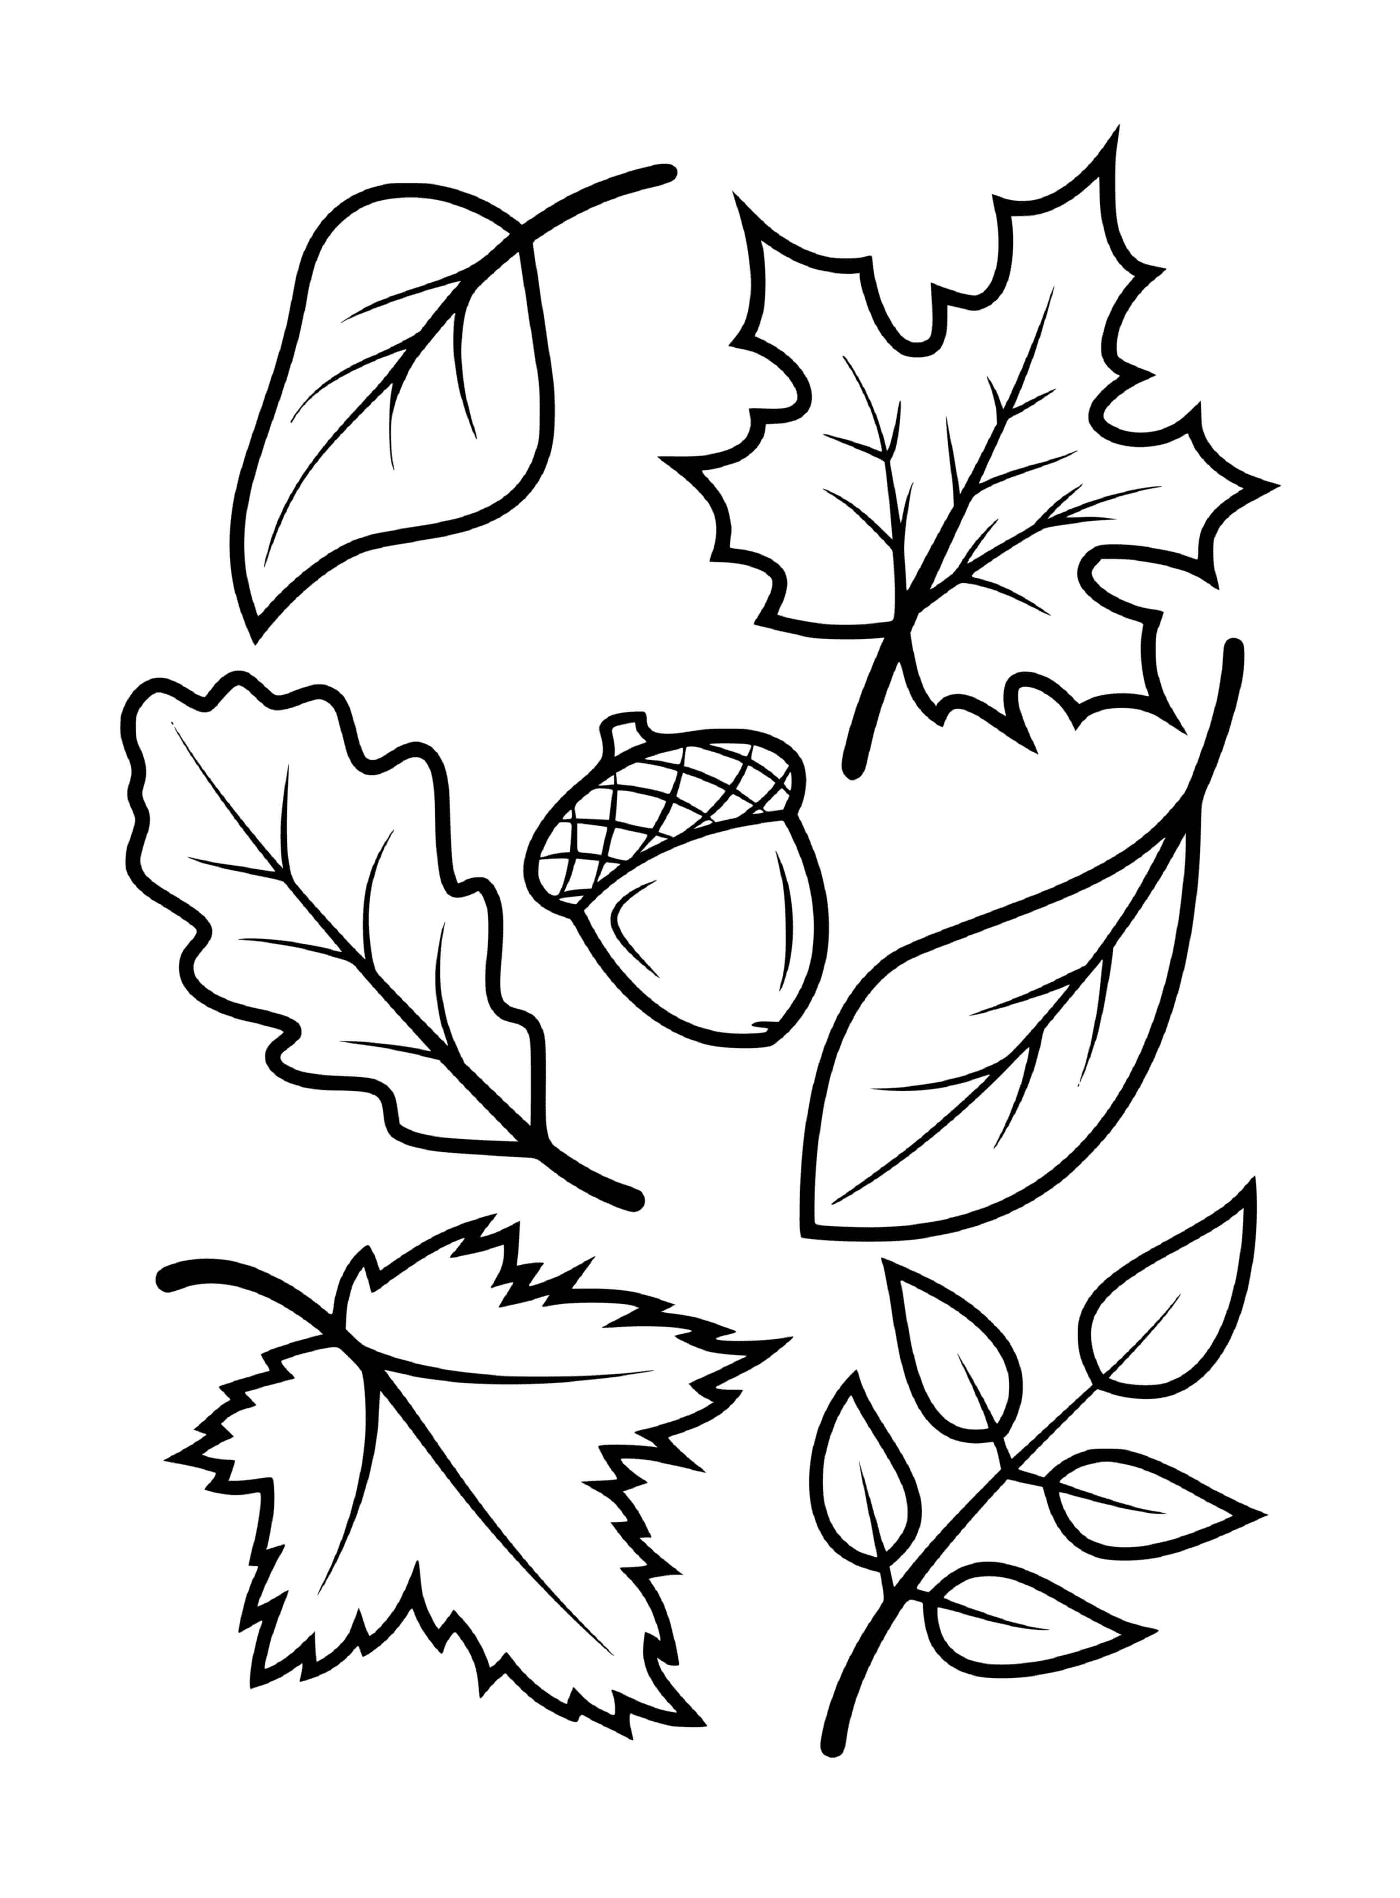  Leaves and acorns of autumn trees (eg maple, beech, oak) 